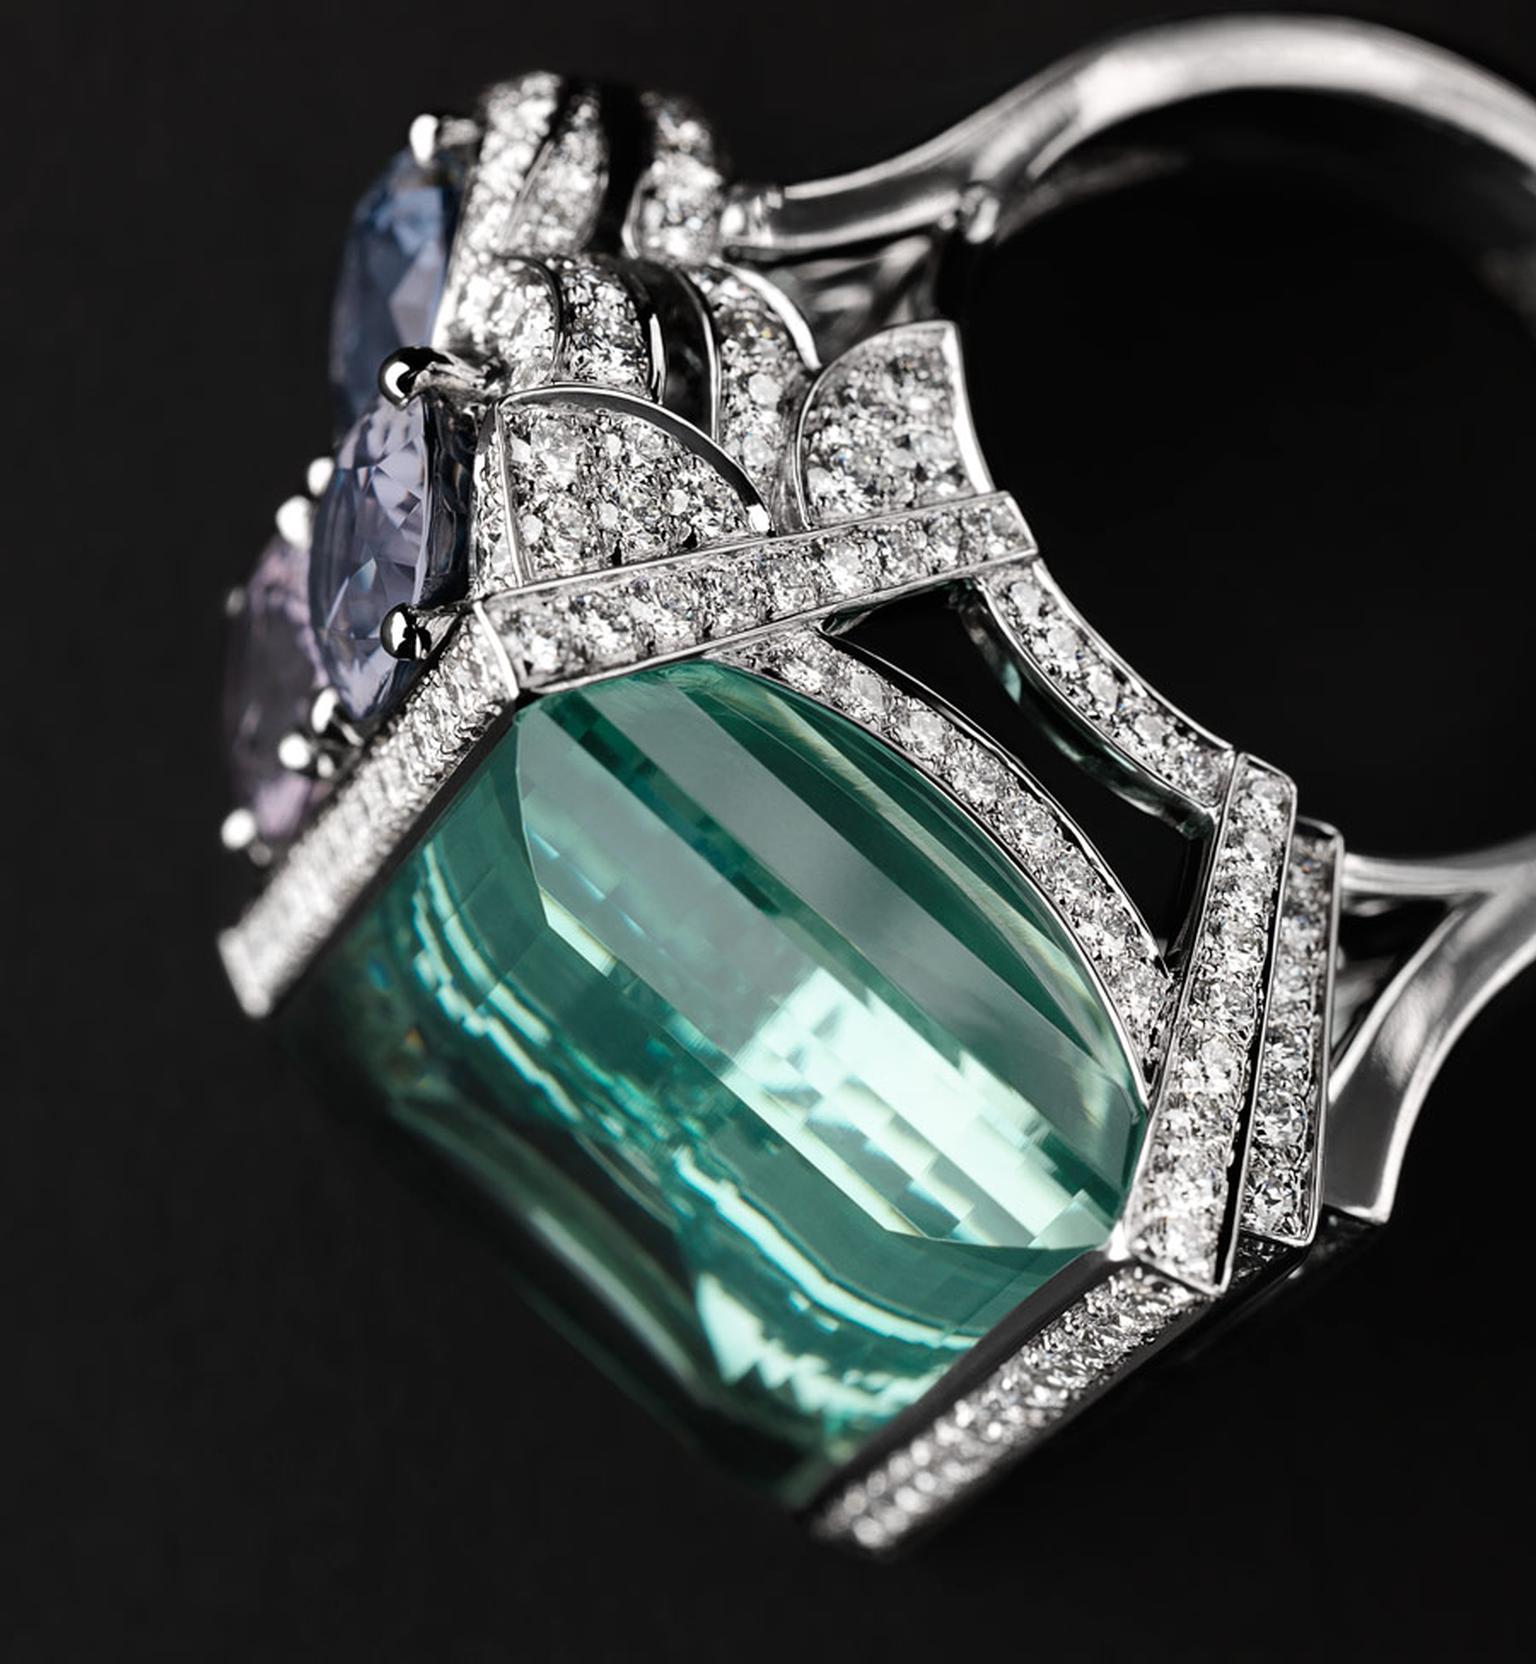 Cartier platinum Boreal Ring featuring a single aquamarine (29ct), three spinels (5.37ct) and brilliant-cut diamonds. Image by: Julien Claessens & Thomas Deschamps © Cartier 2012